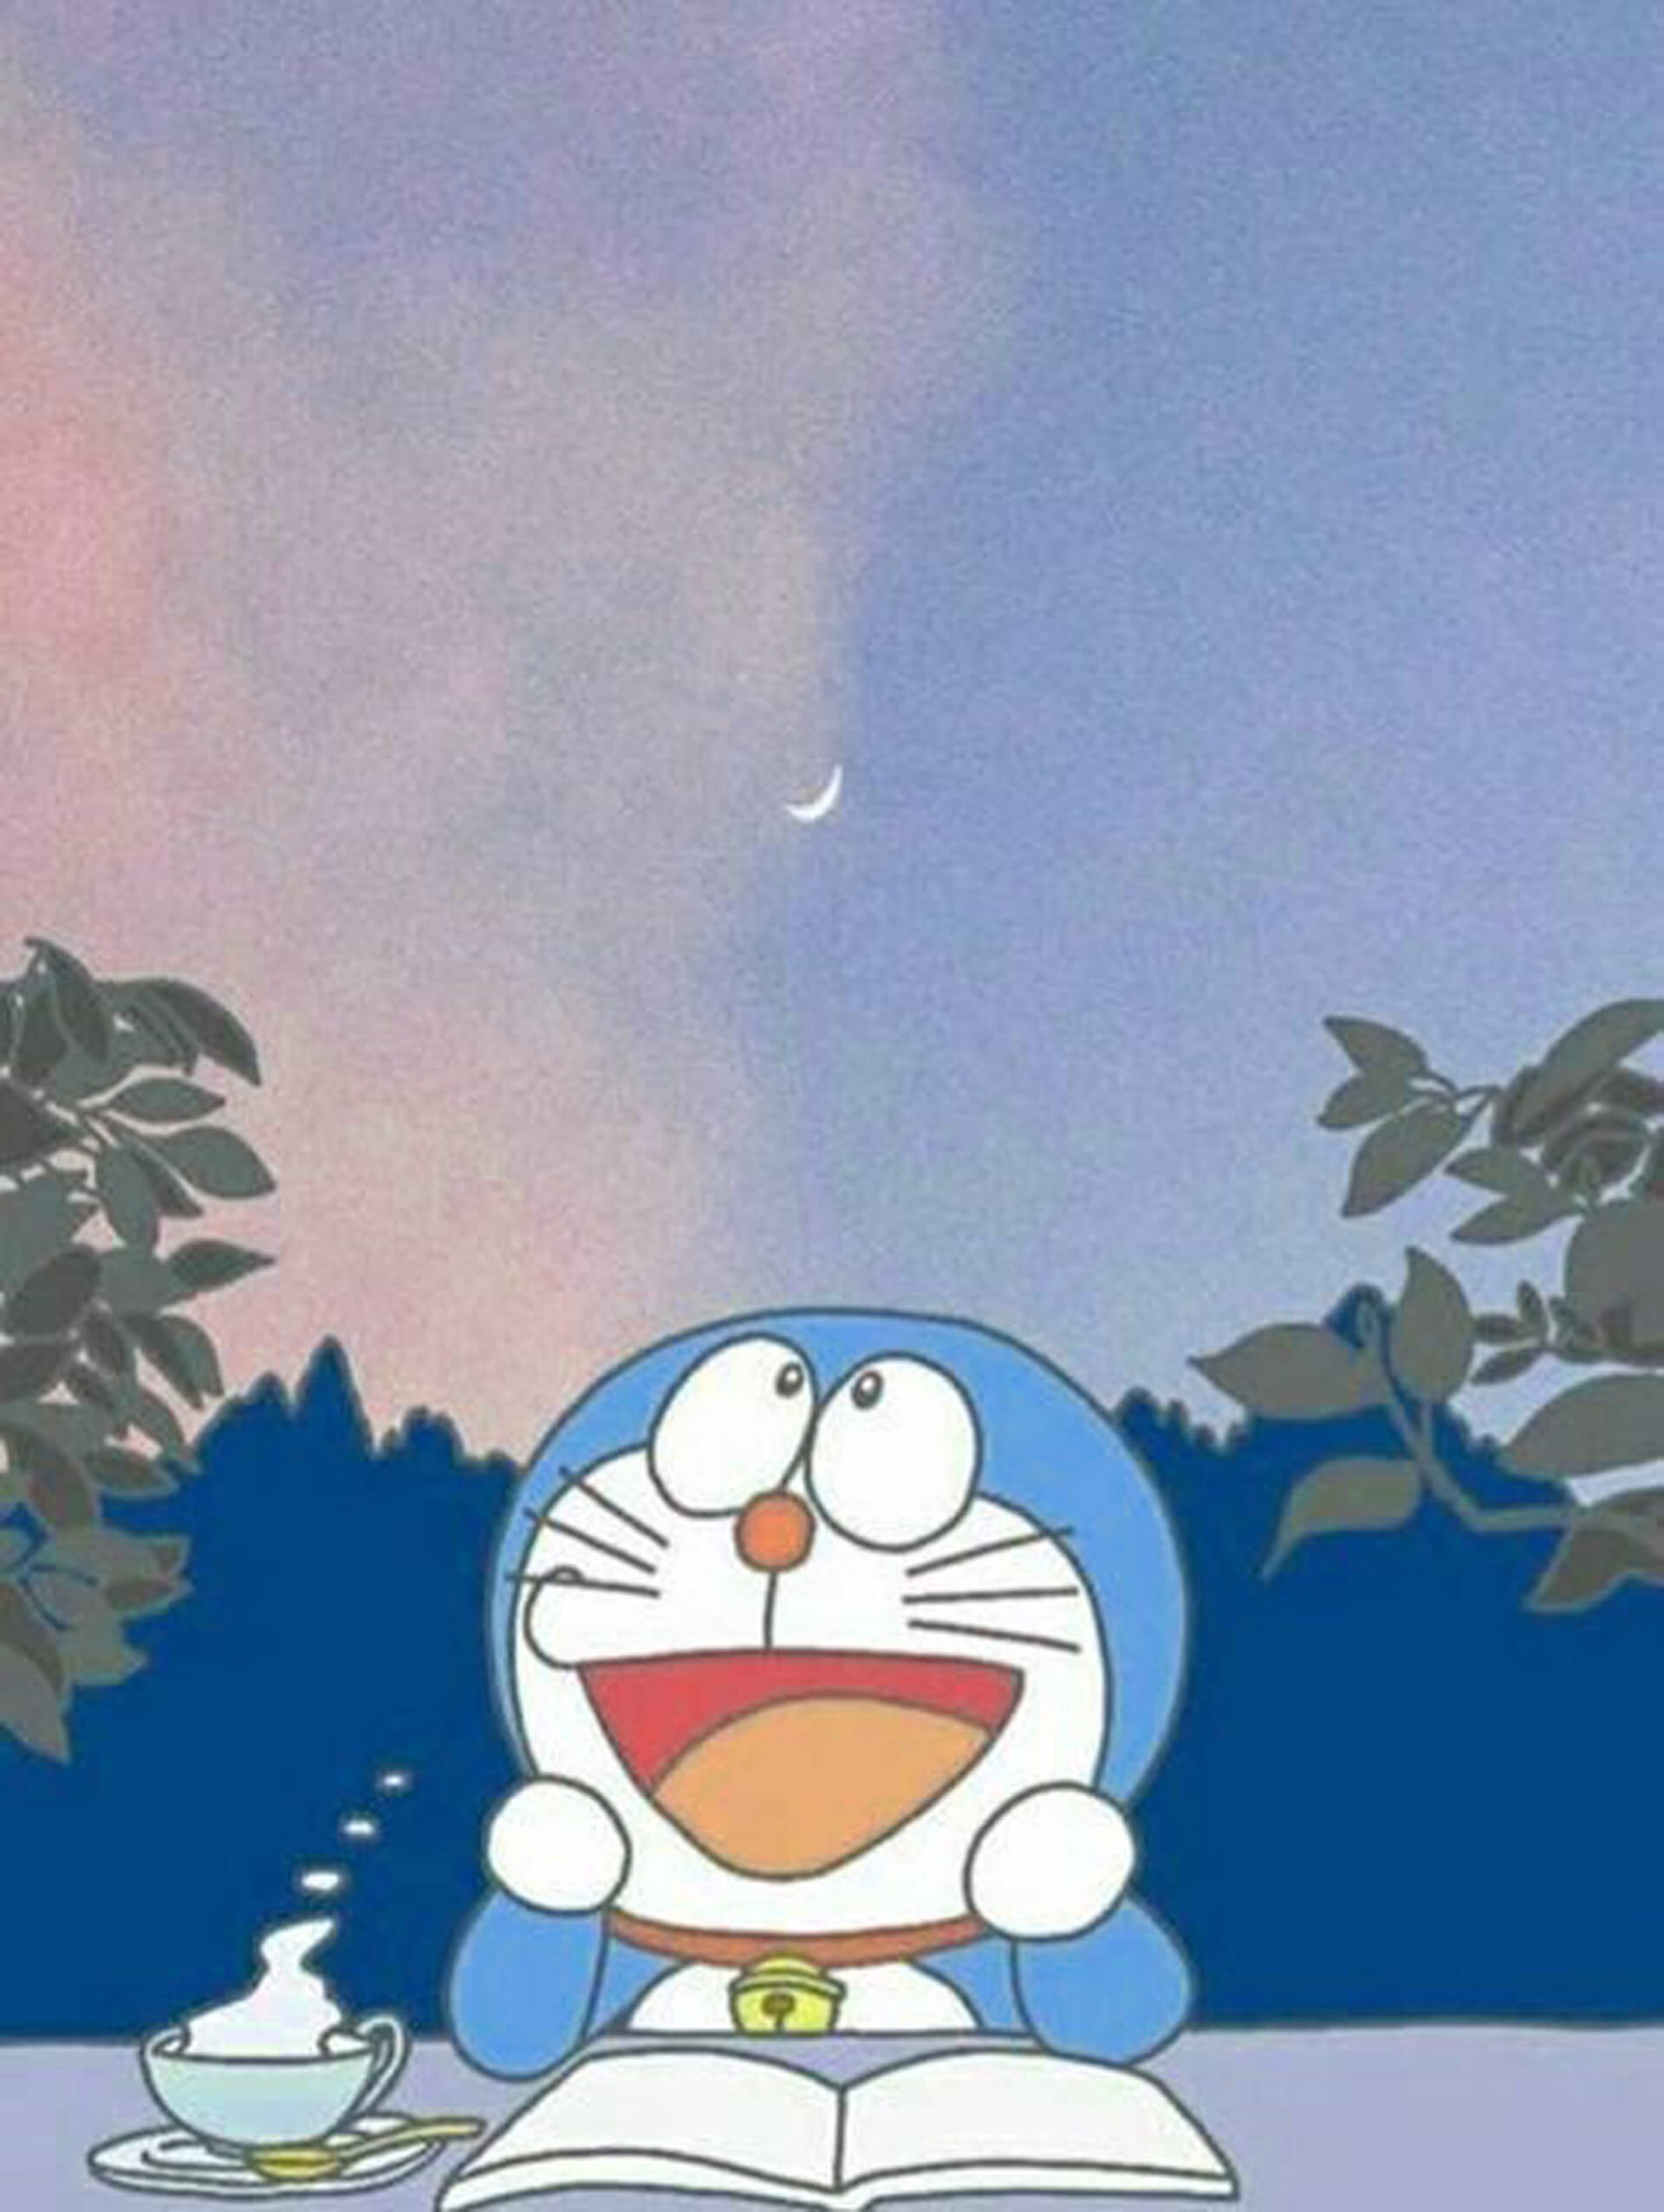 Doraemon images wallpaper photo pics hd download